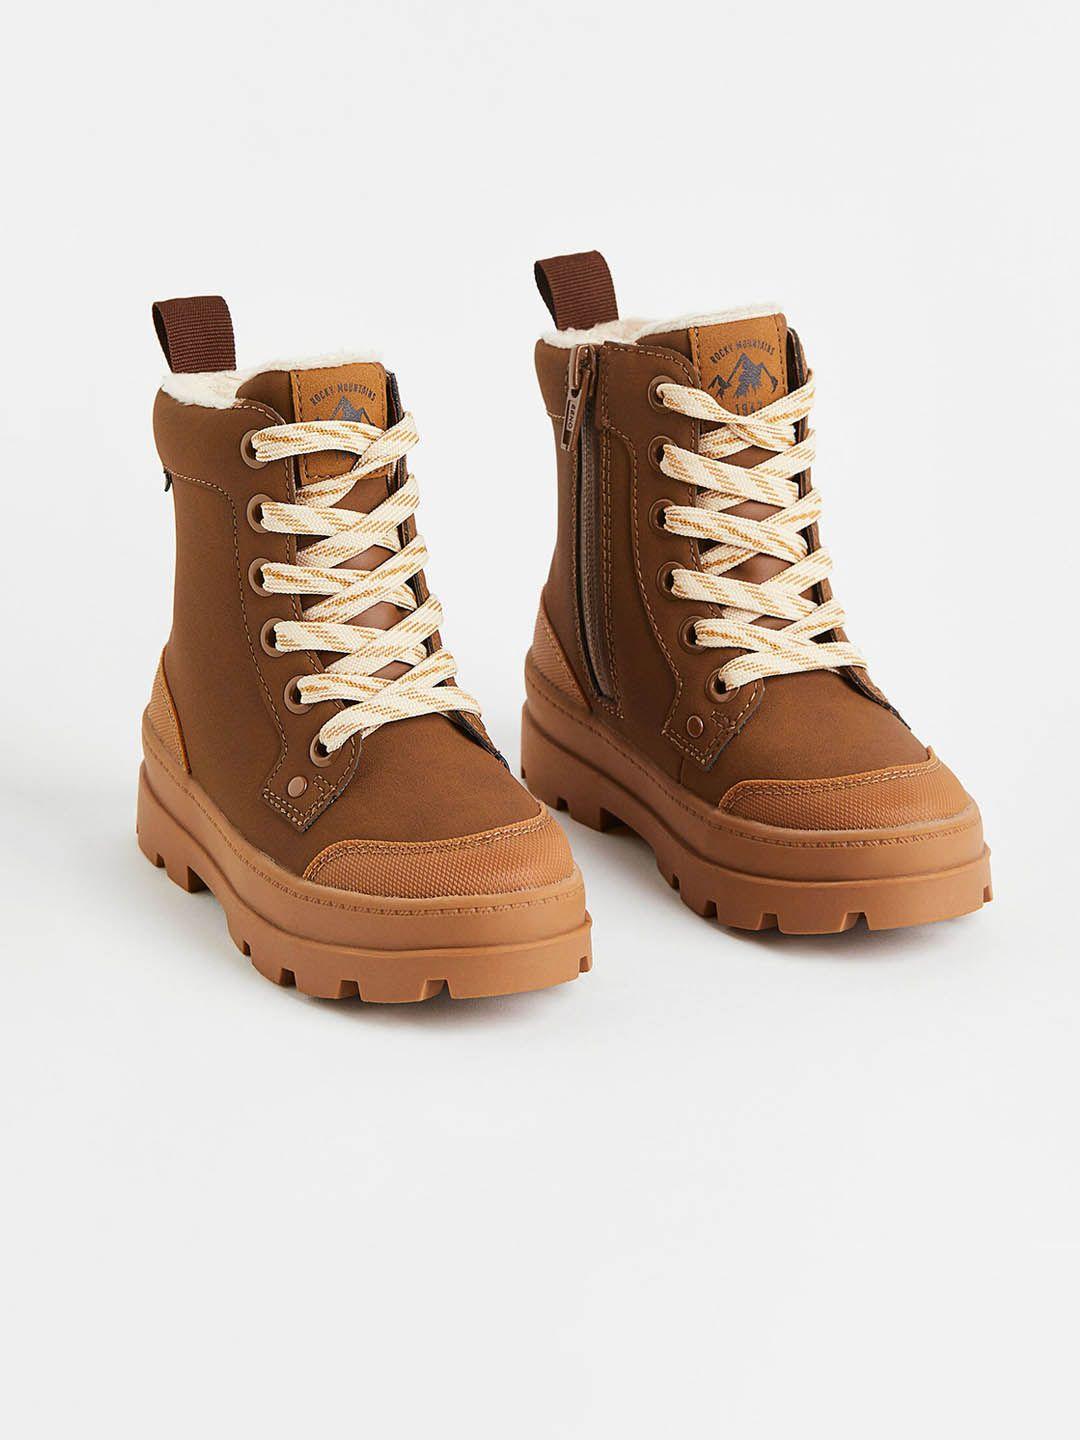 h&m-girls-waterproof-boots